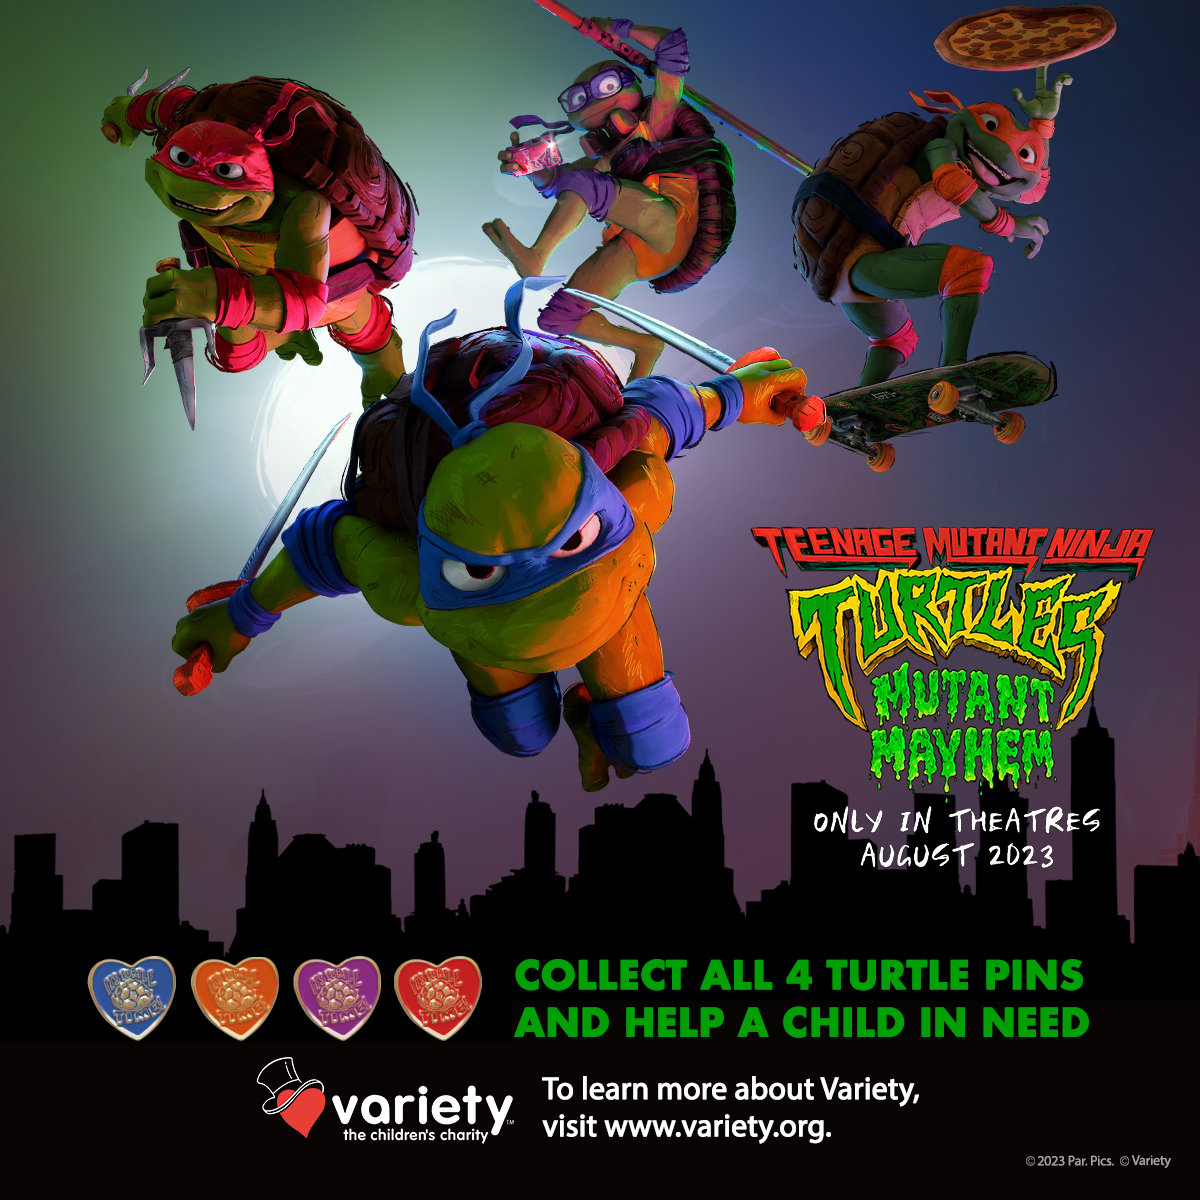 Teenage Mutant Ninja Turtles Gold Heart Pin for Variety the Children's Charity